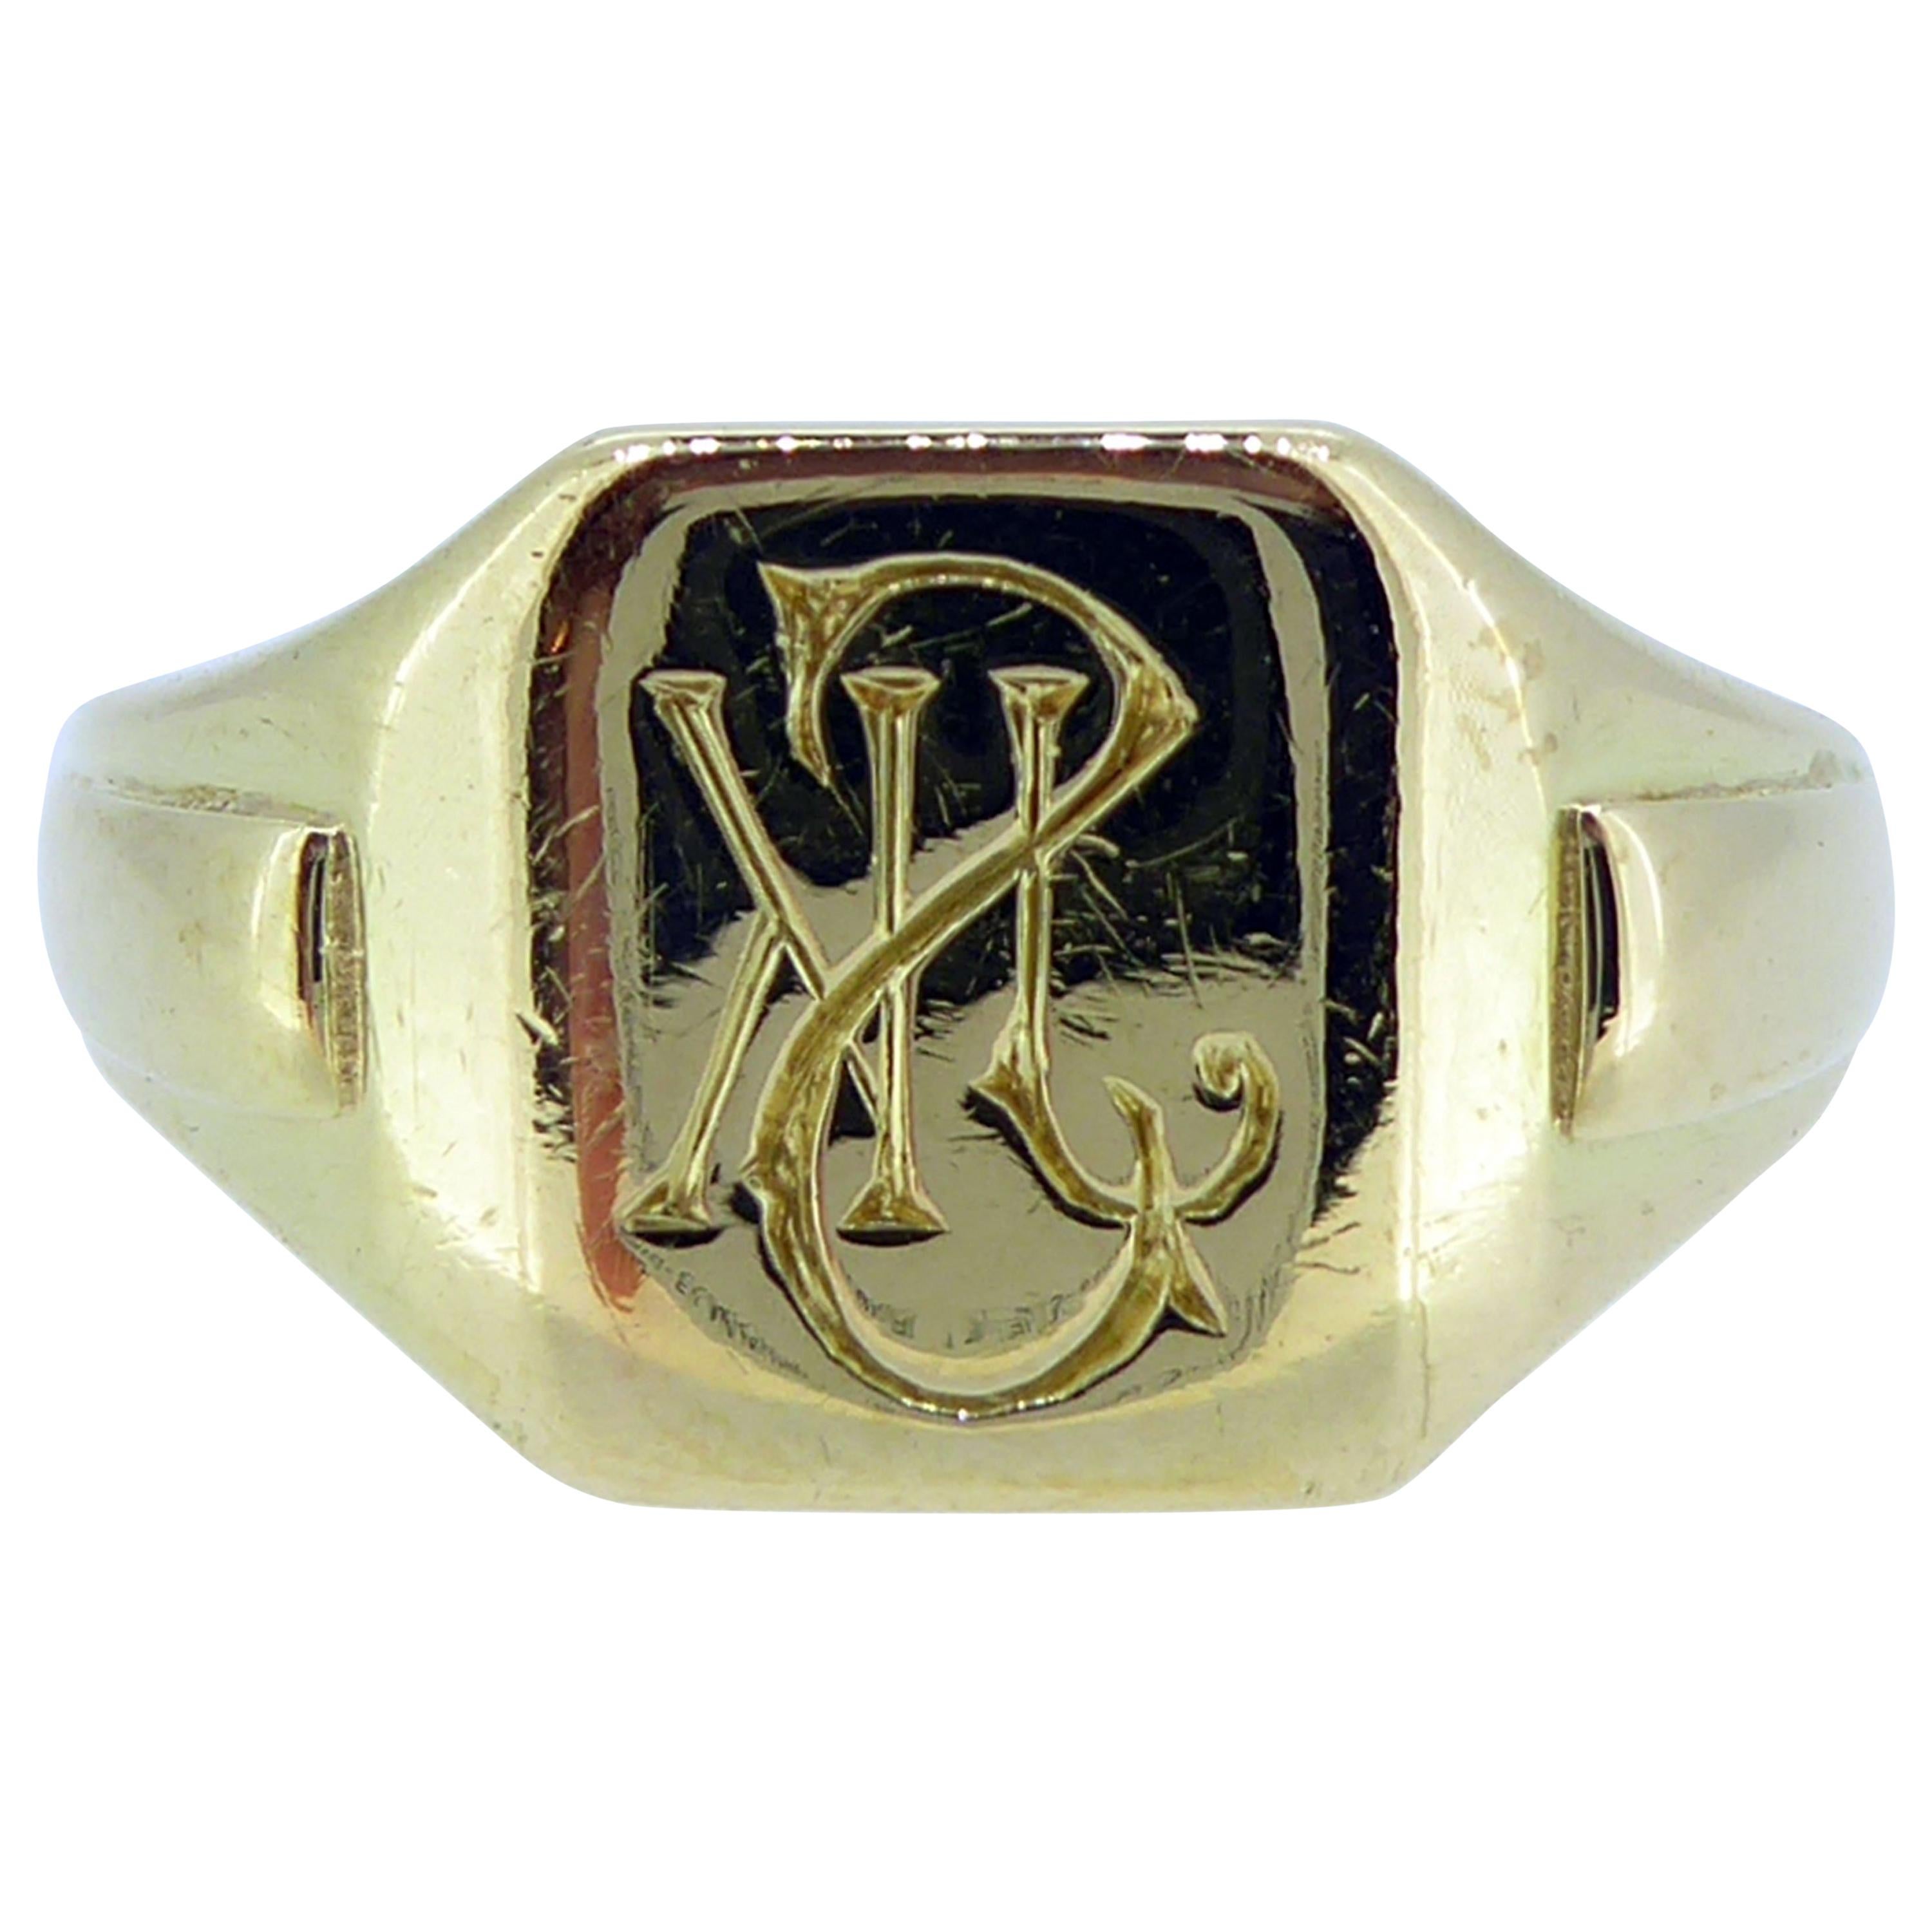 Vintage Gold Signet Ring, Initialled Engraved Seal, 18 Carat, Birmingham 1935